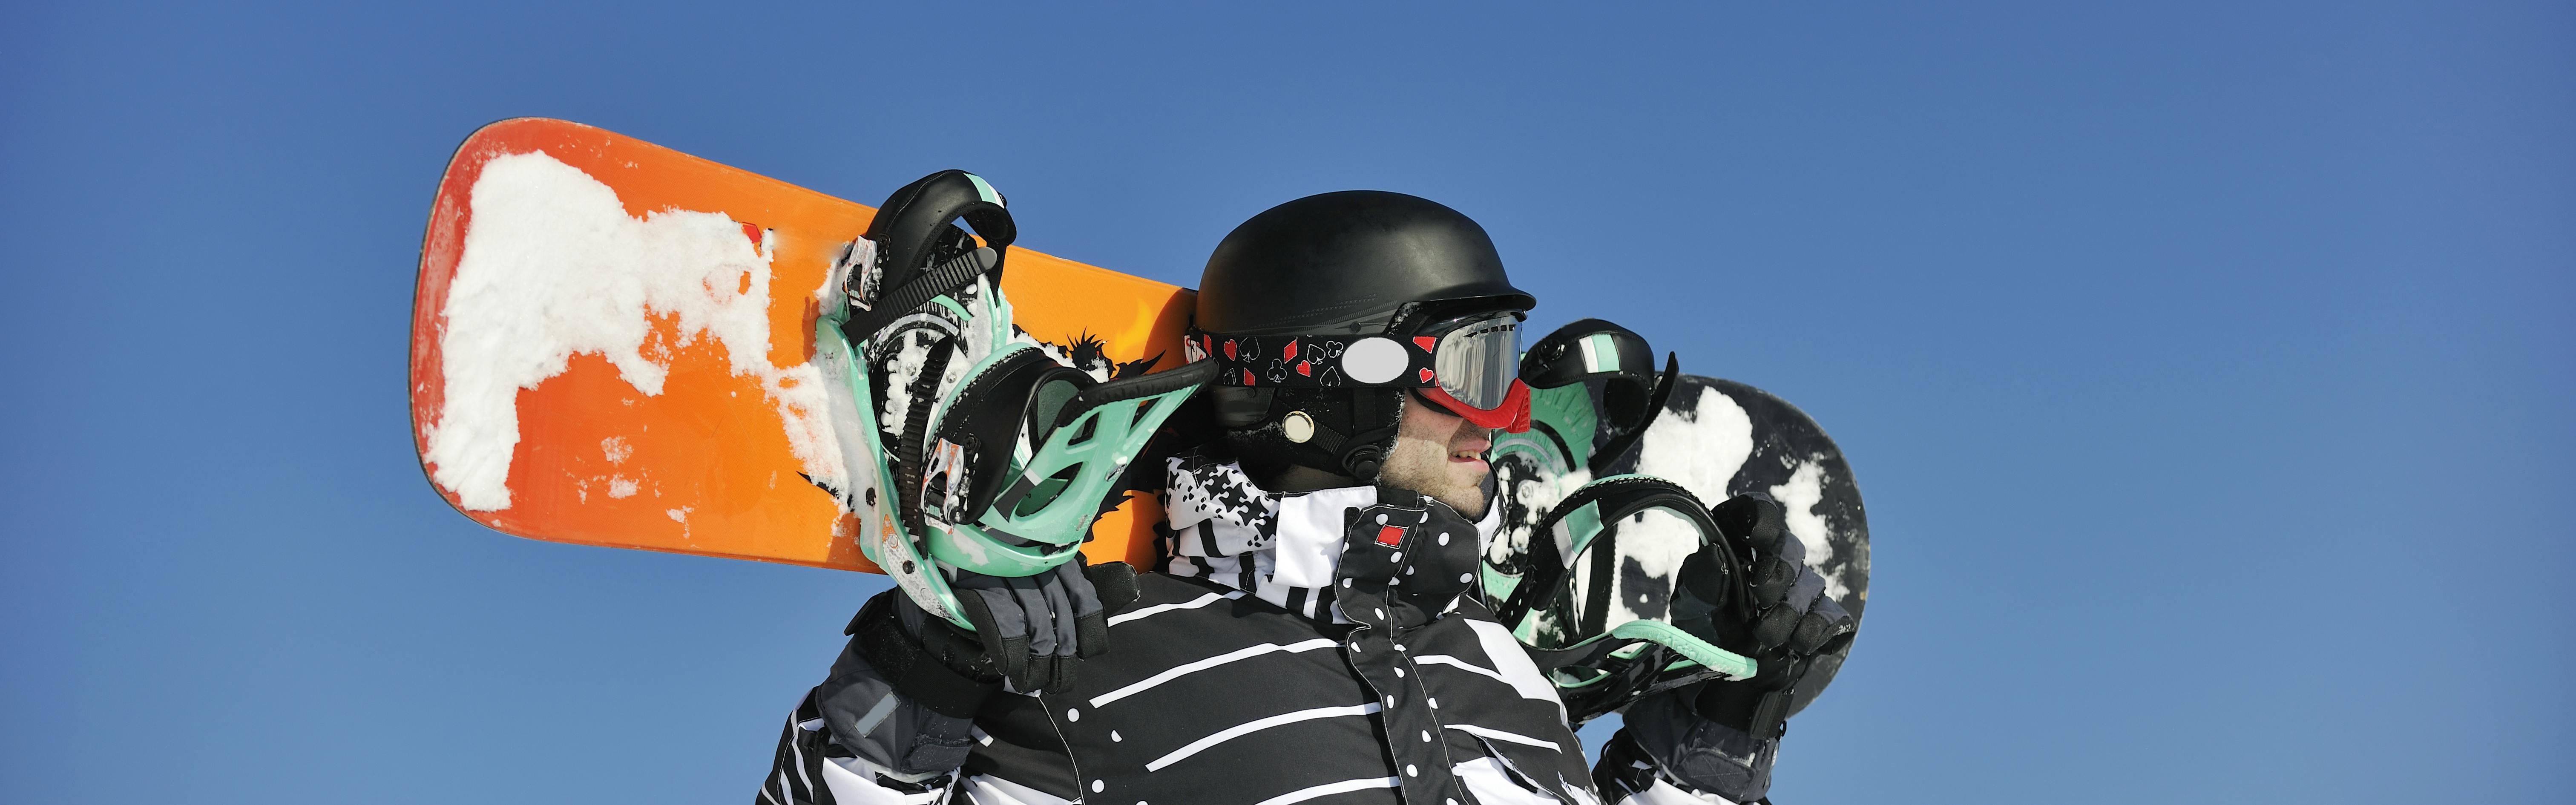 Jet Ski Accessories – Pro Guarding